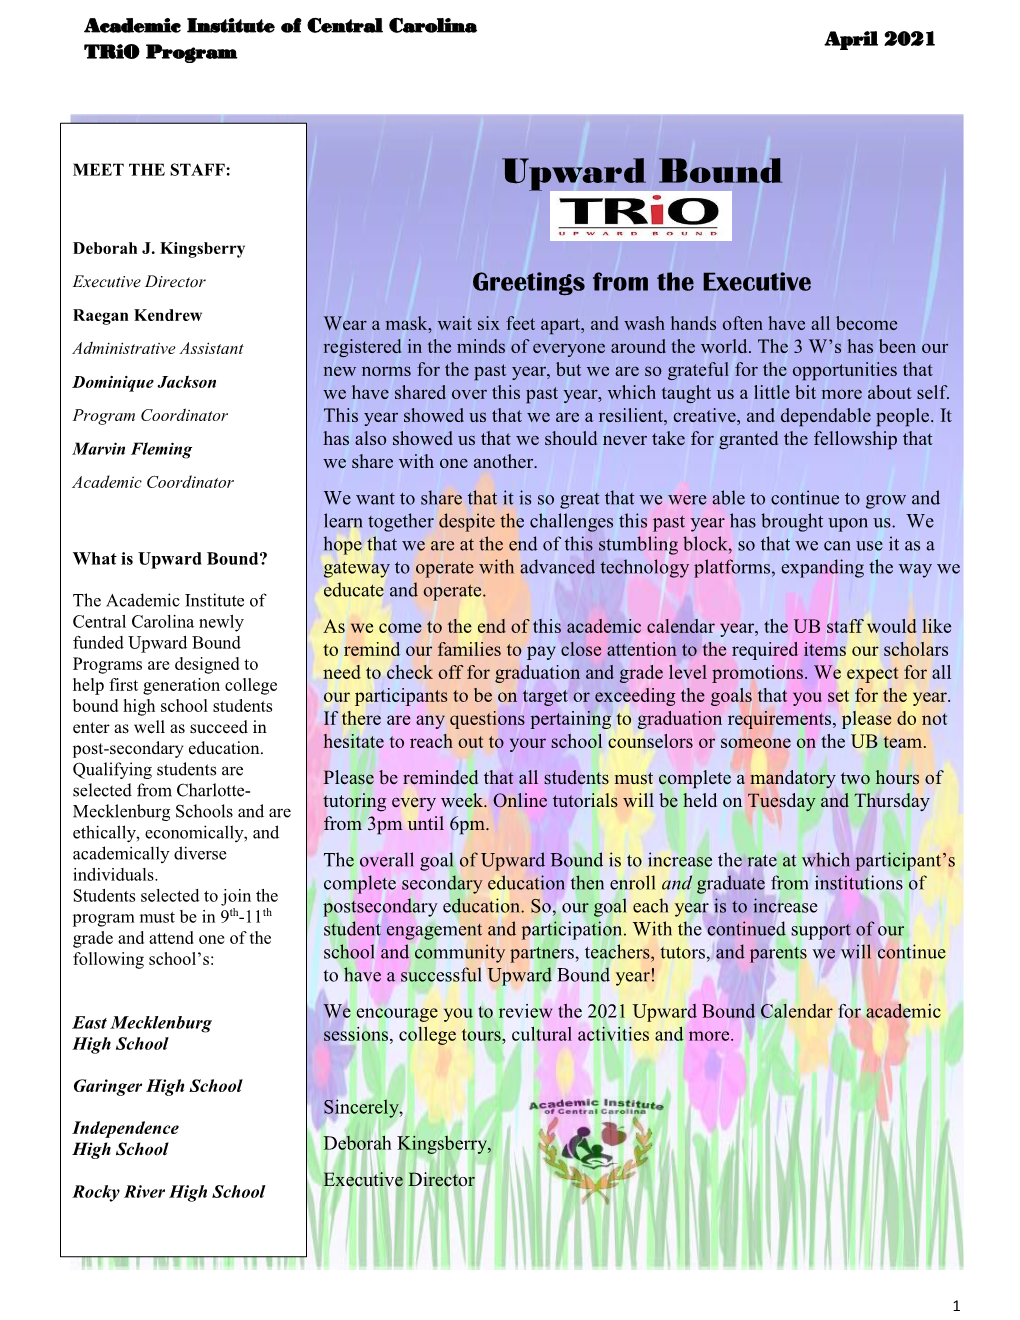 April 2021 Trio Program